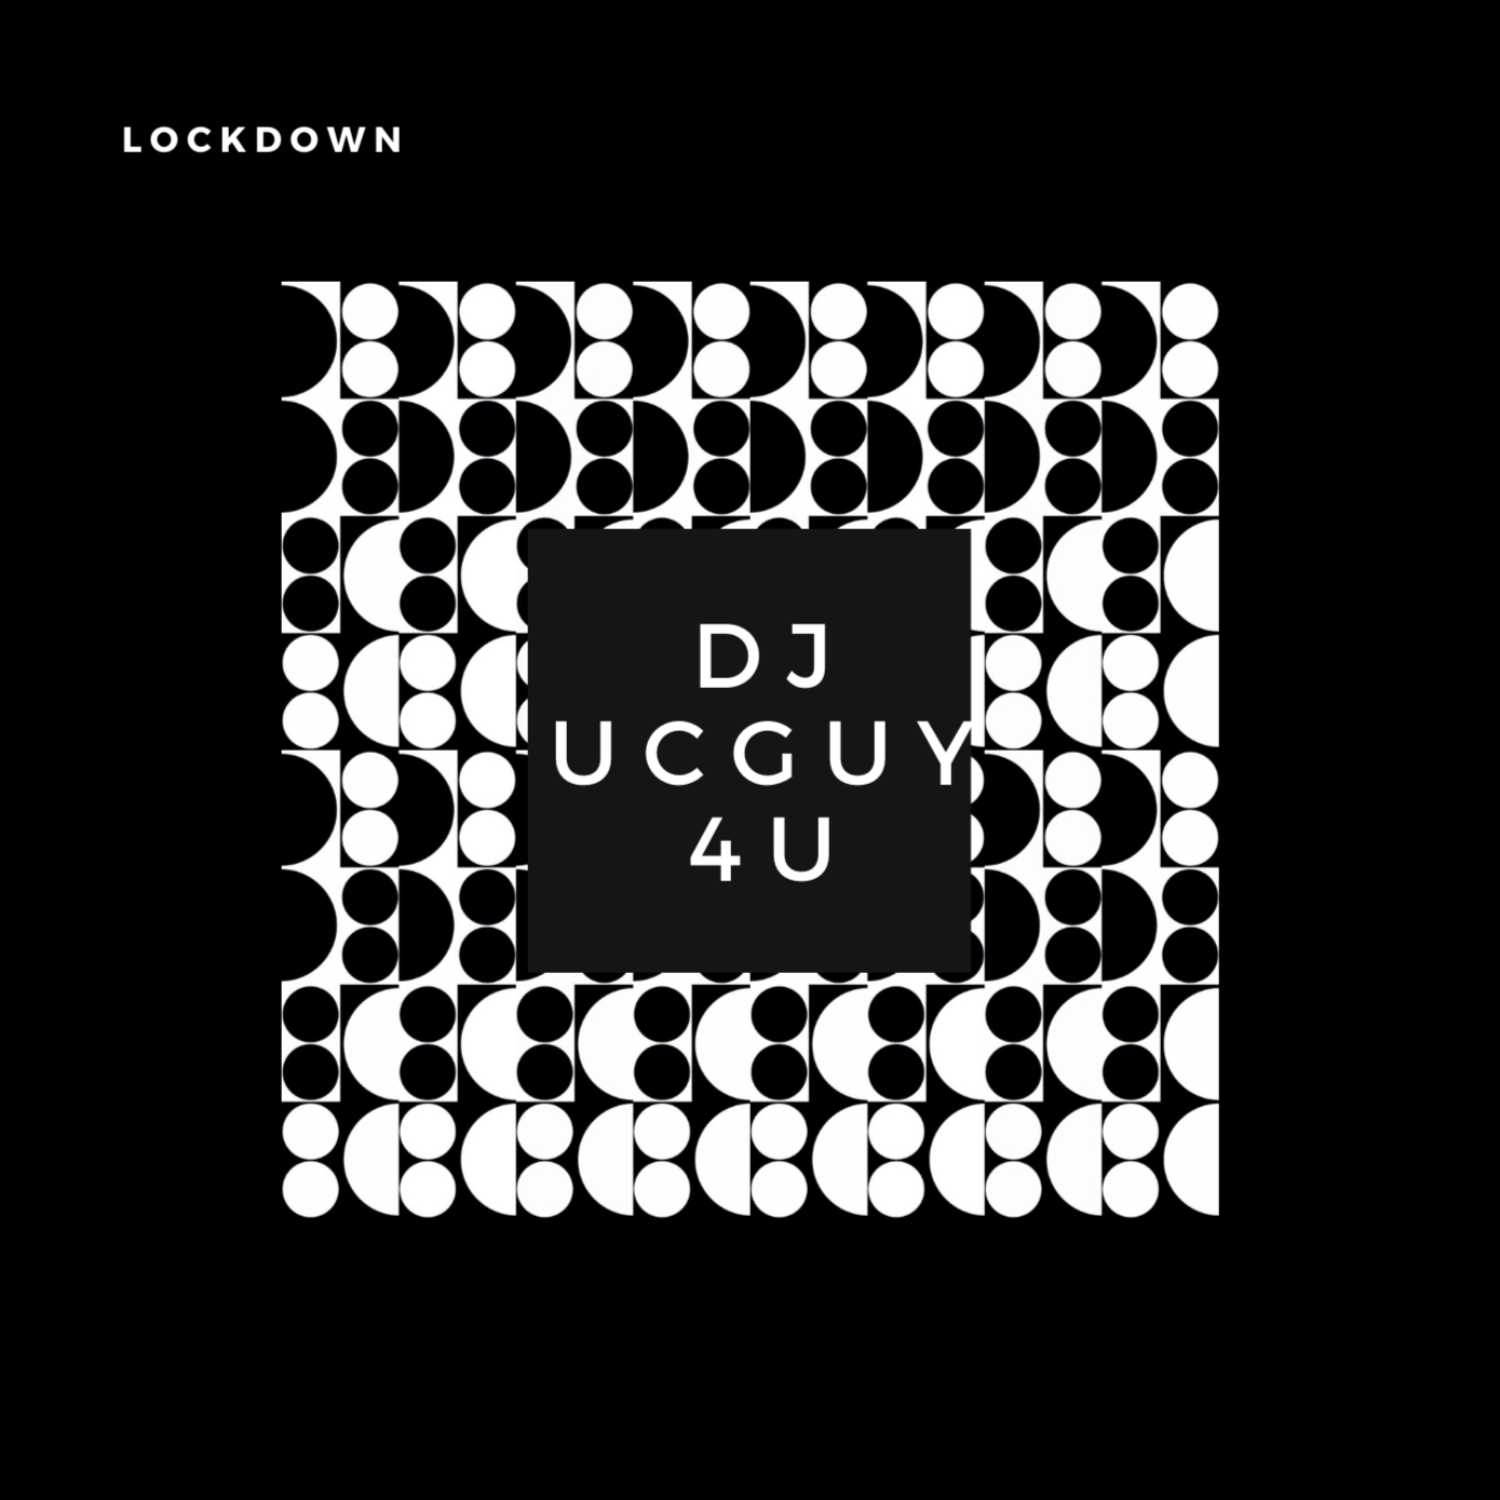 Lockdown Mix By DJucguy4u